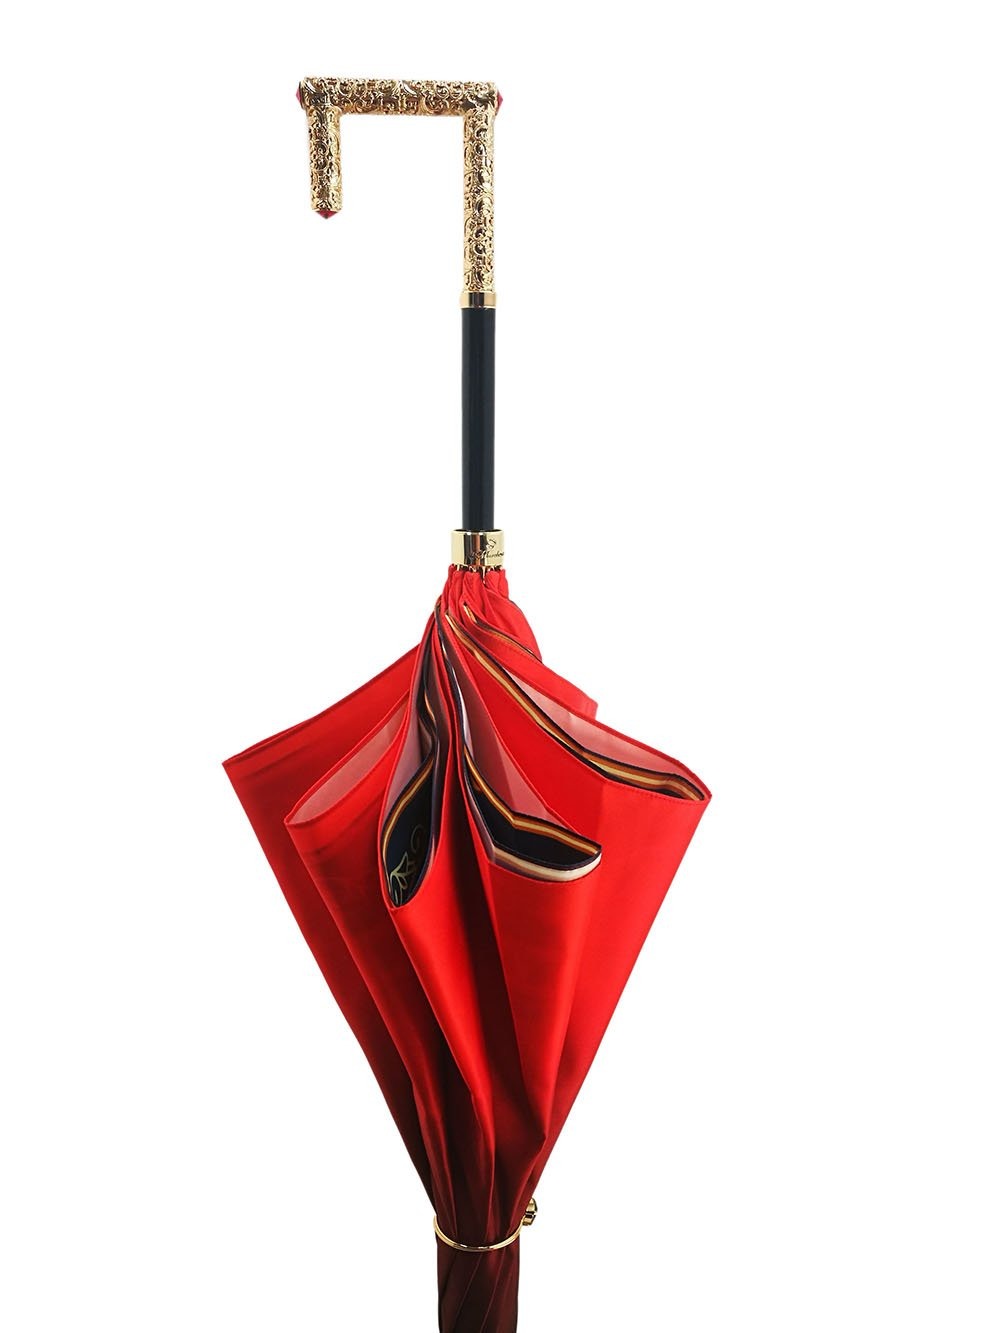 Luxurious Red Umbrella, Double Cloth - Abstract Design - il-marchesato